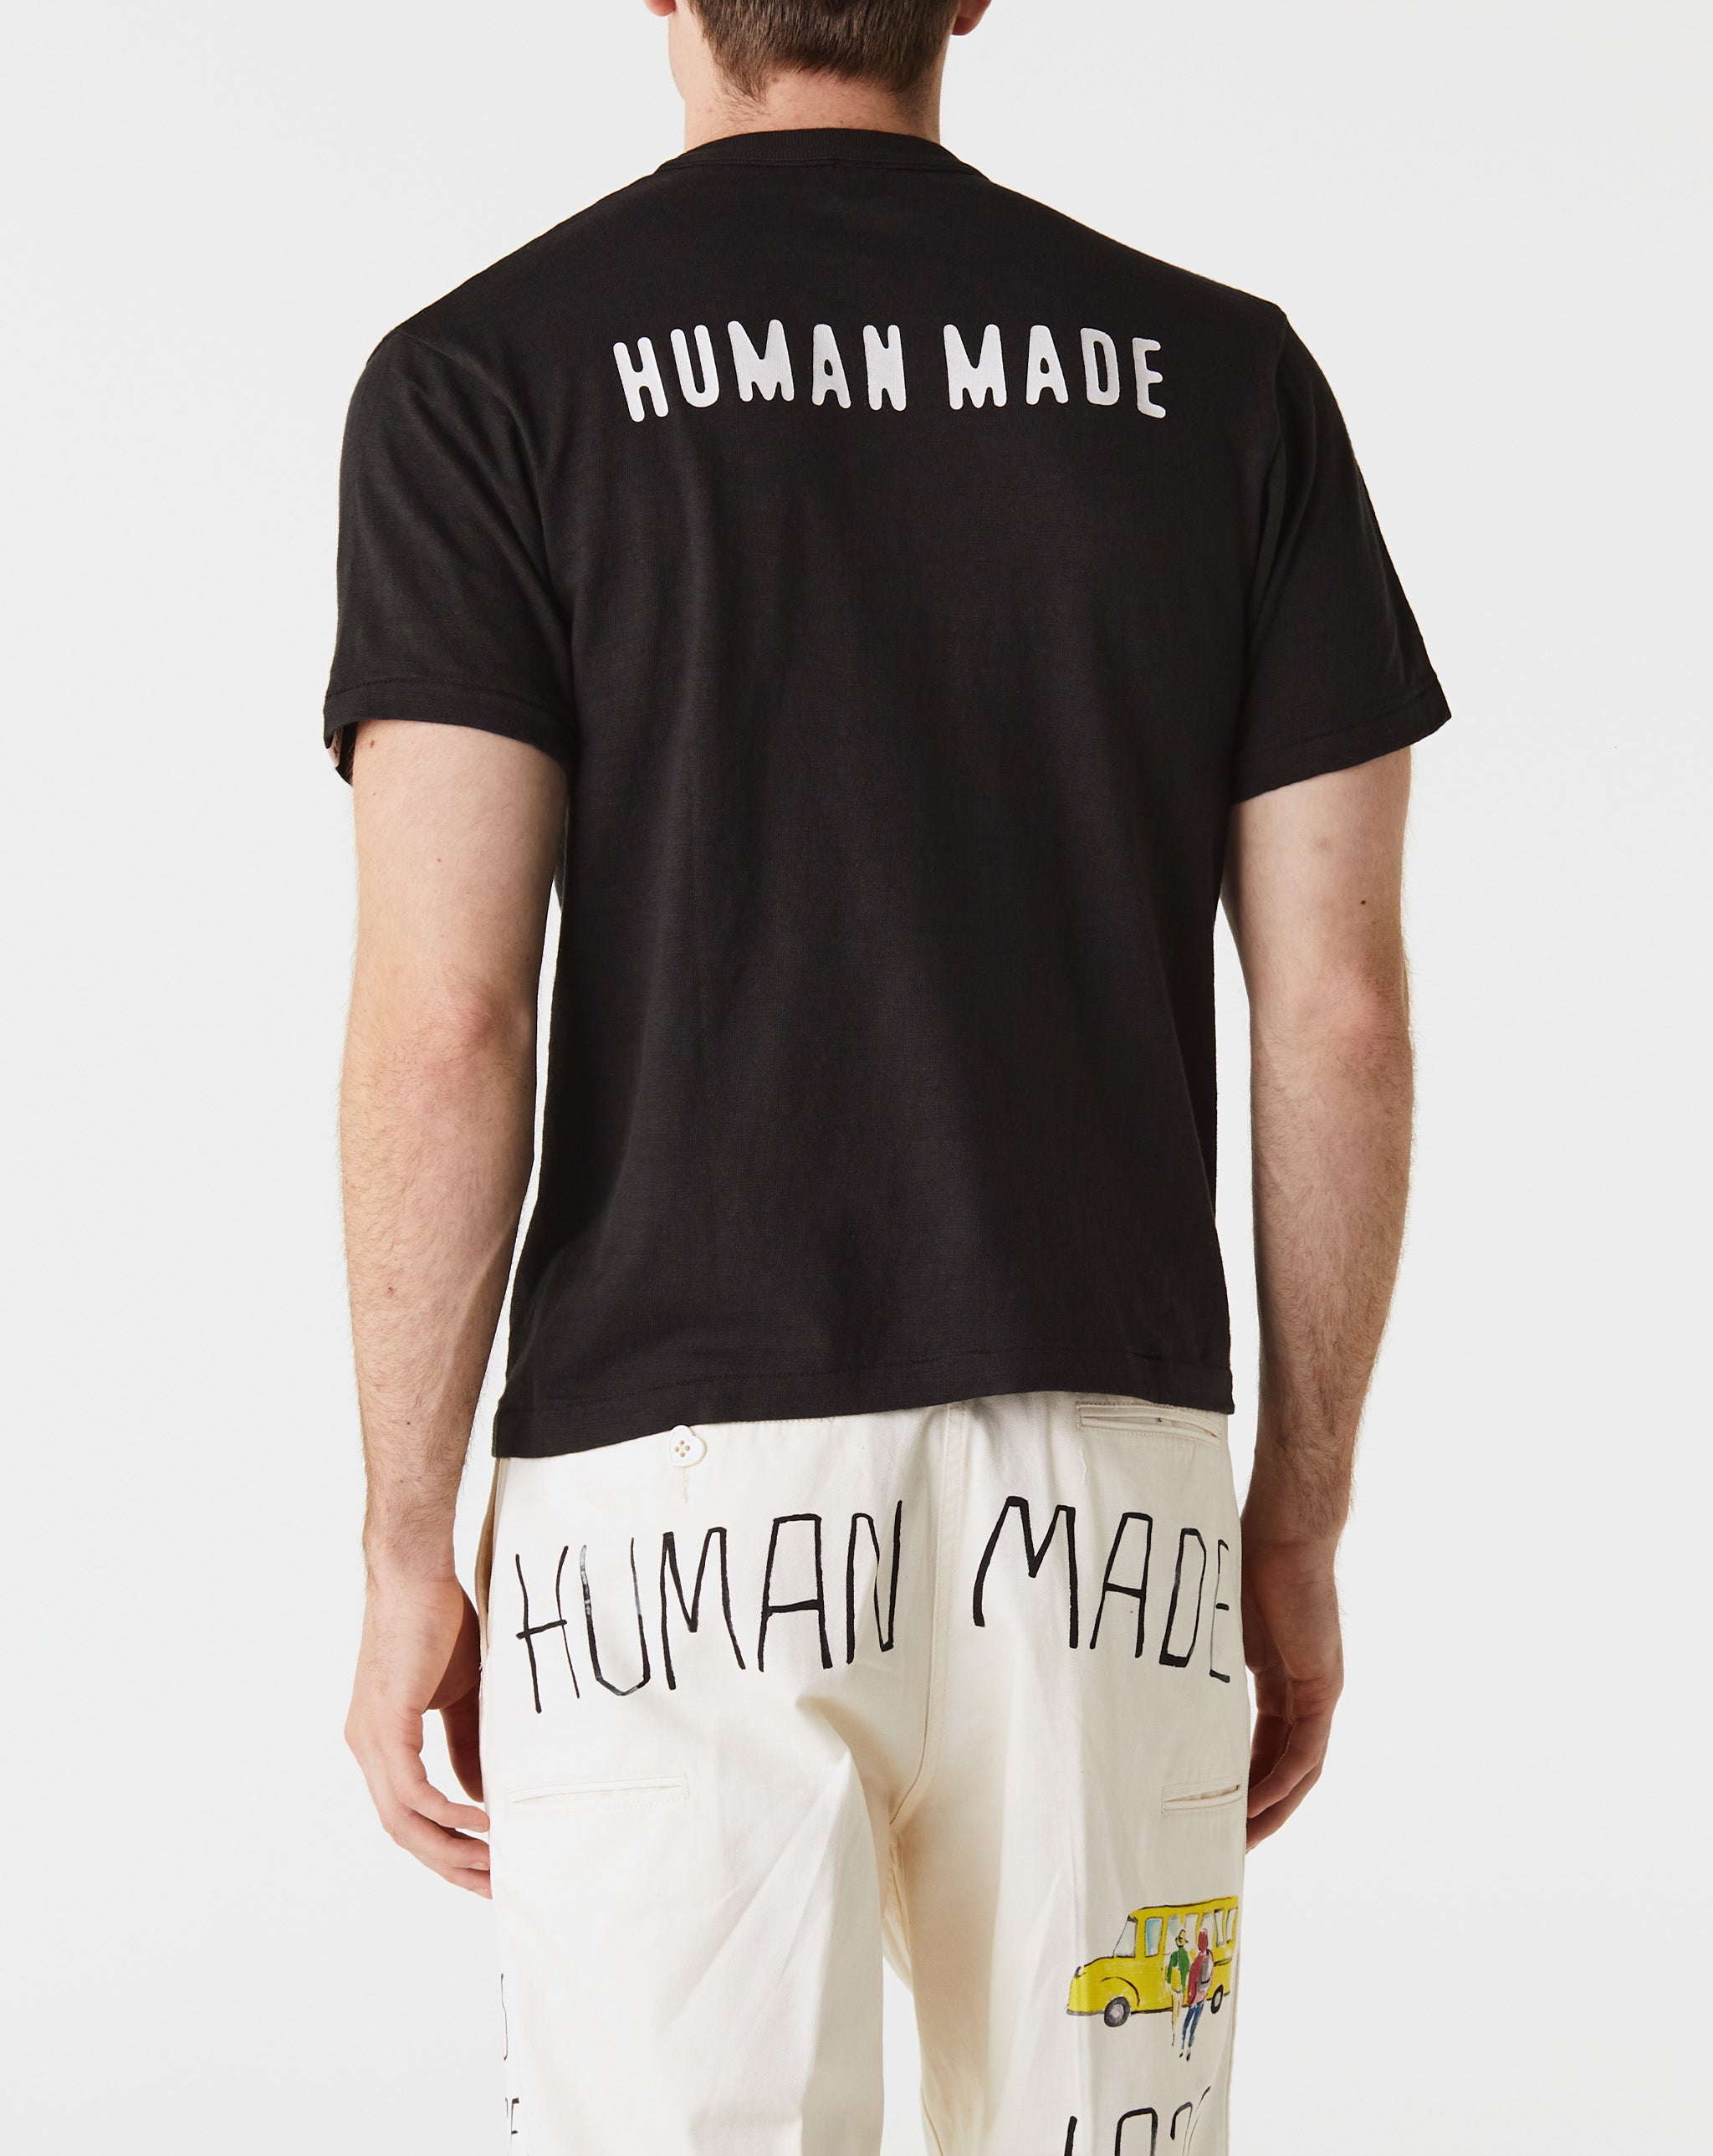 Human Made why look so different t shirt Supreme frc  - Cheap Erlebniswelt-fliegenfischen Jordan outlet